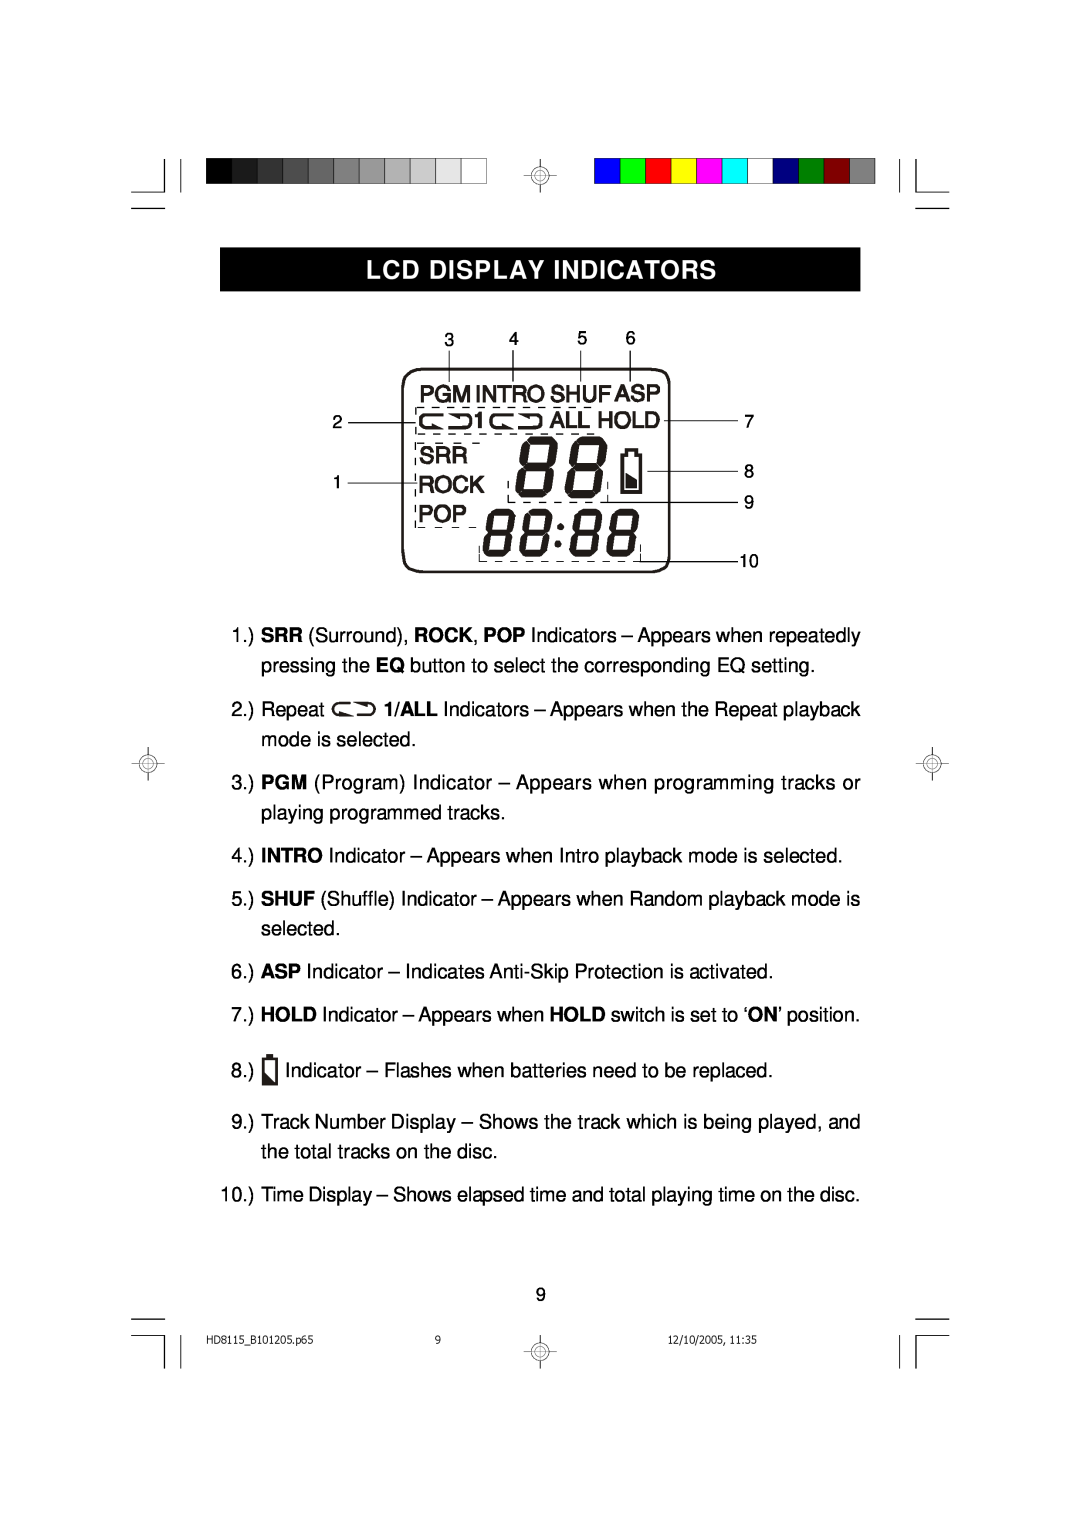 Emerson owner manual Lcd Display Indicators, HD8115_B101205.p65, 12/10/2005, 11:35 